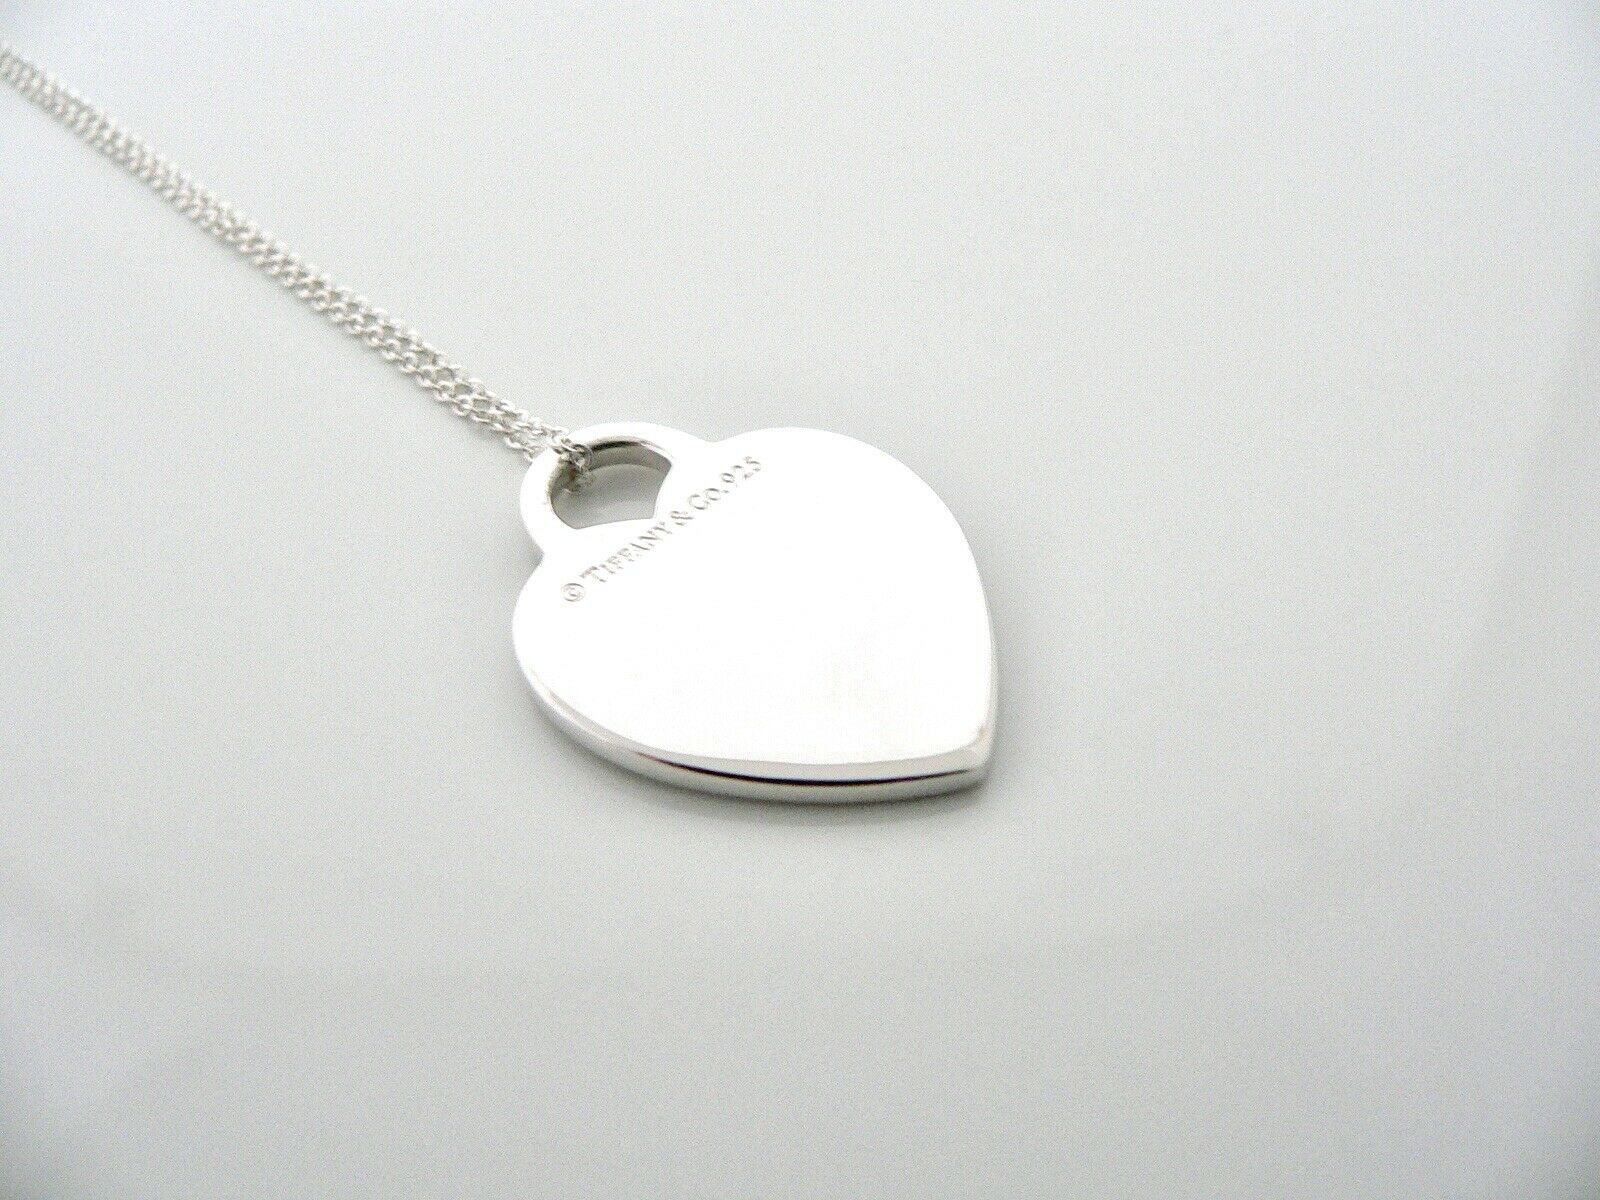 Tiffany & Co. Heart Tag Necklace - Silver | Catch.com.au